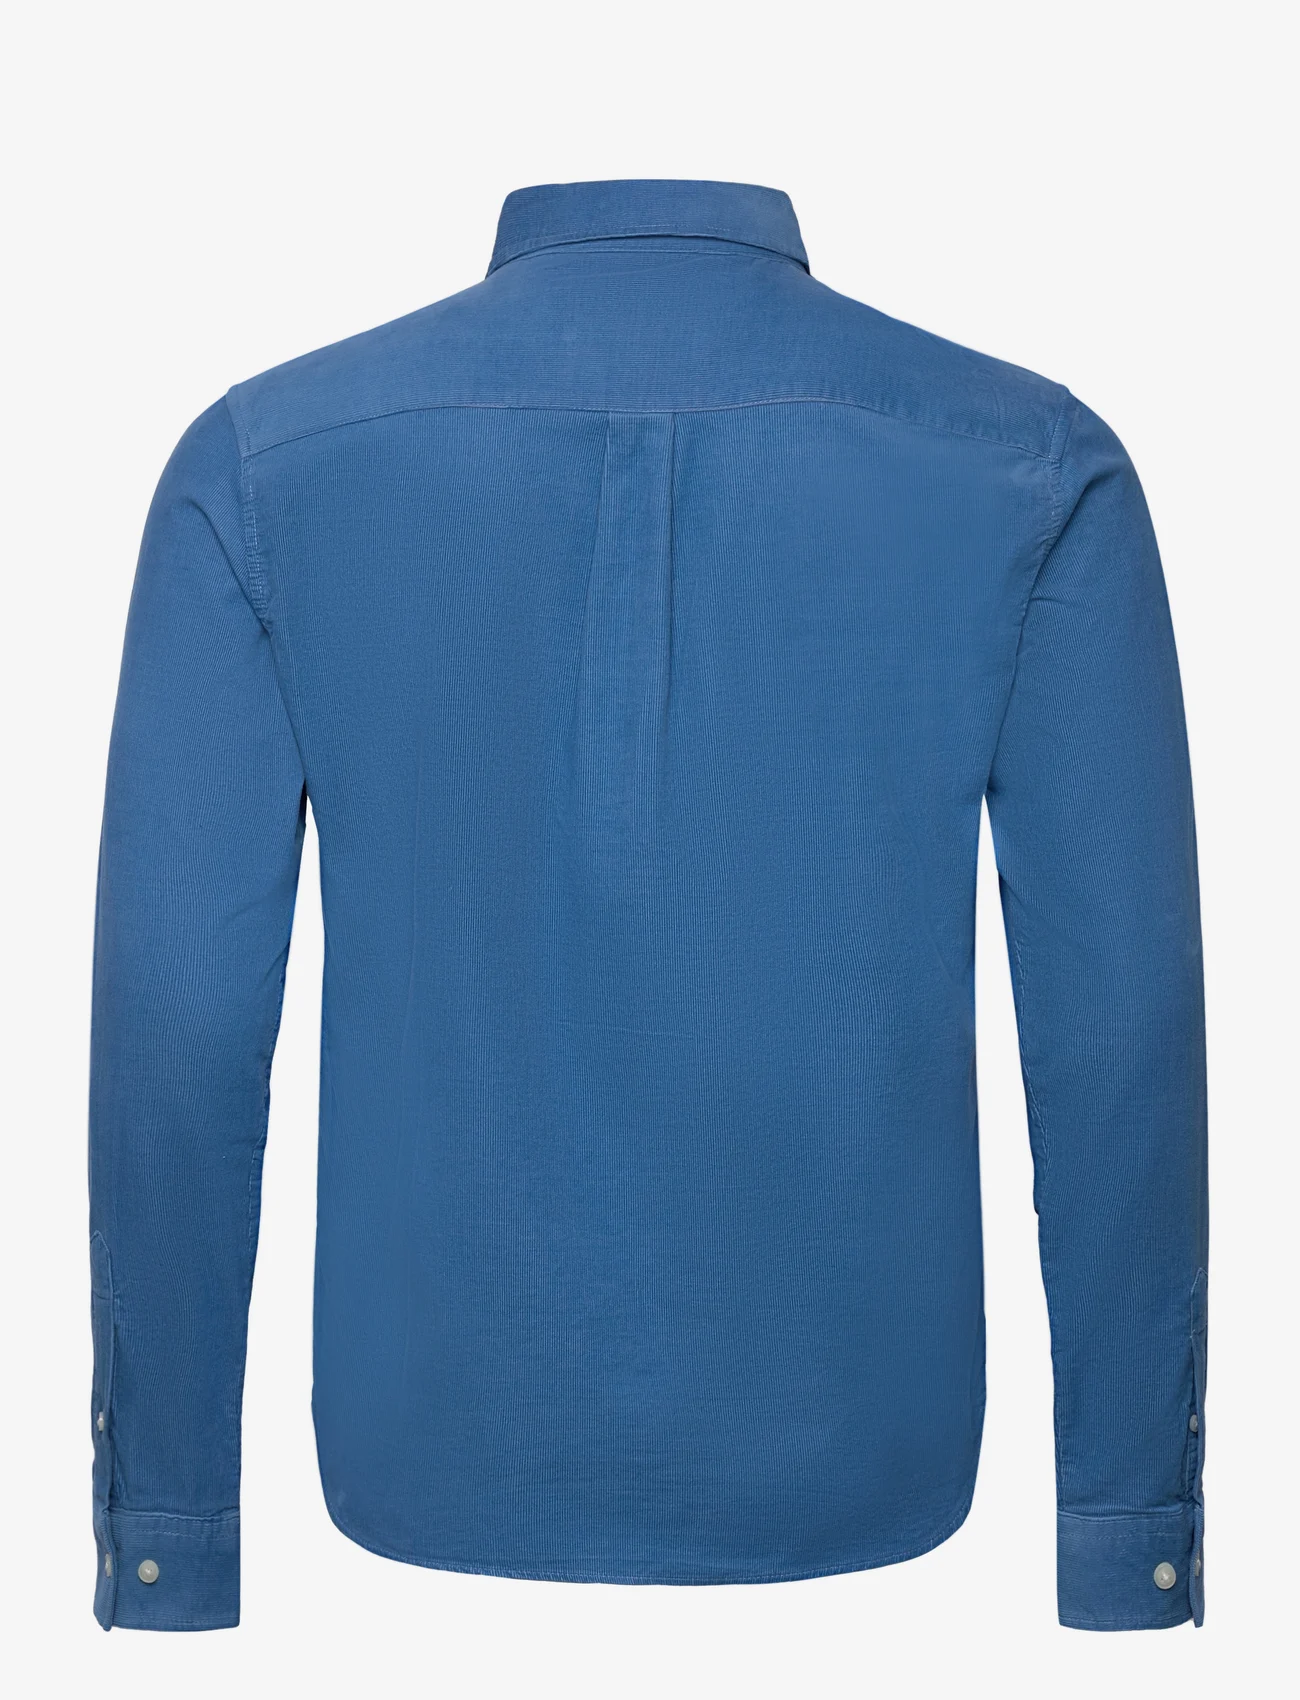 Les Deux - Christoph Corduroy Shirt - corduroy shirts - washed denim blue - 1